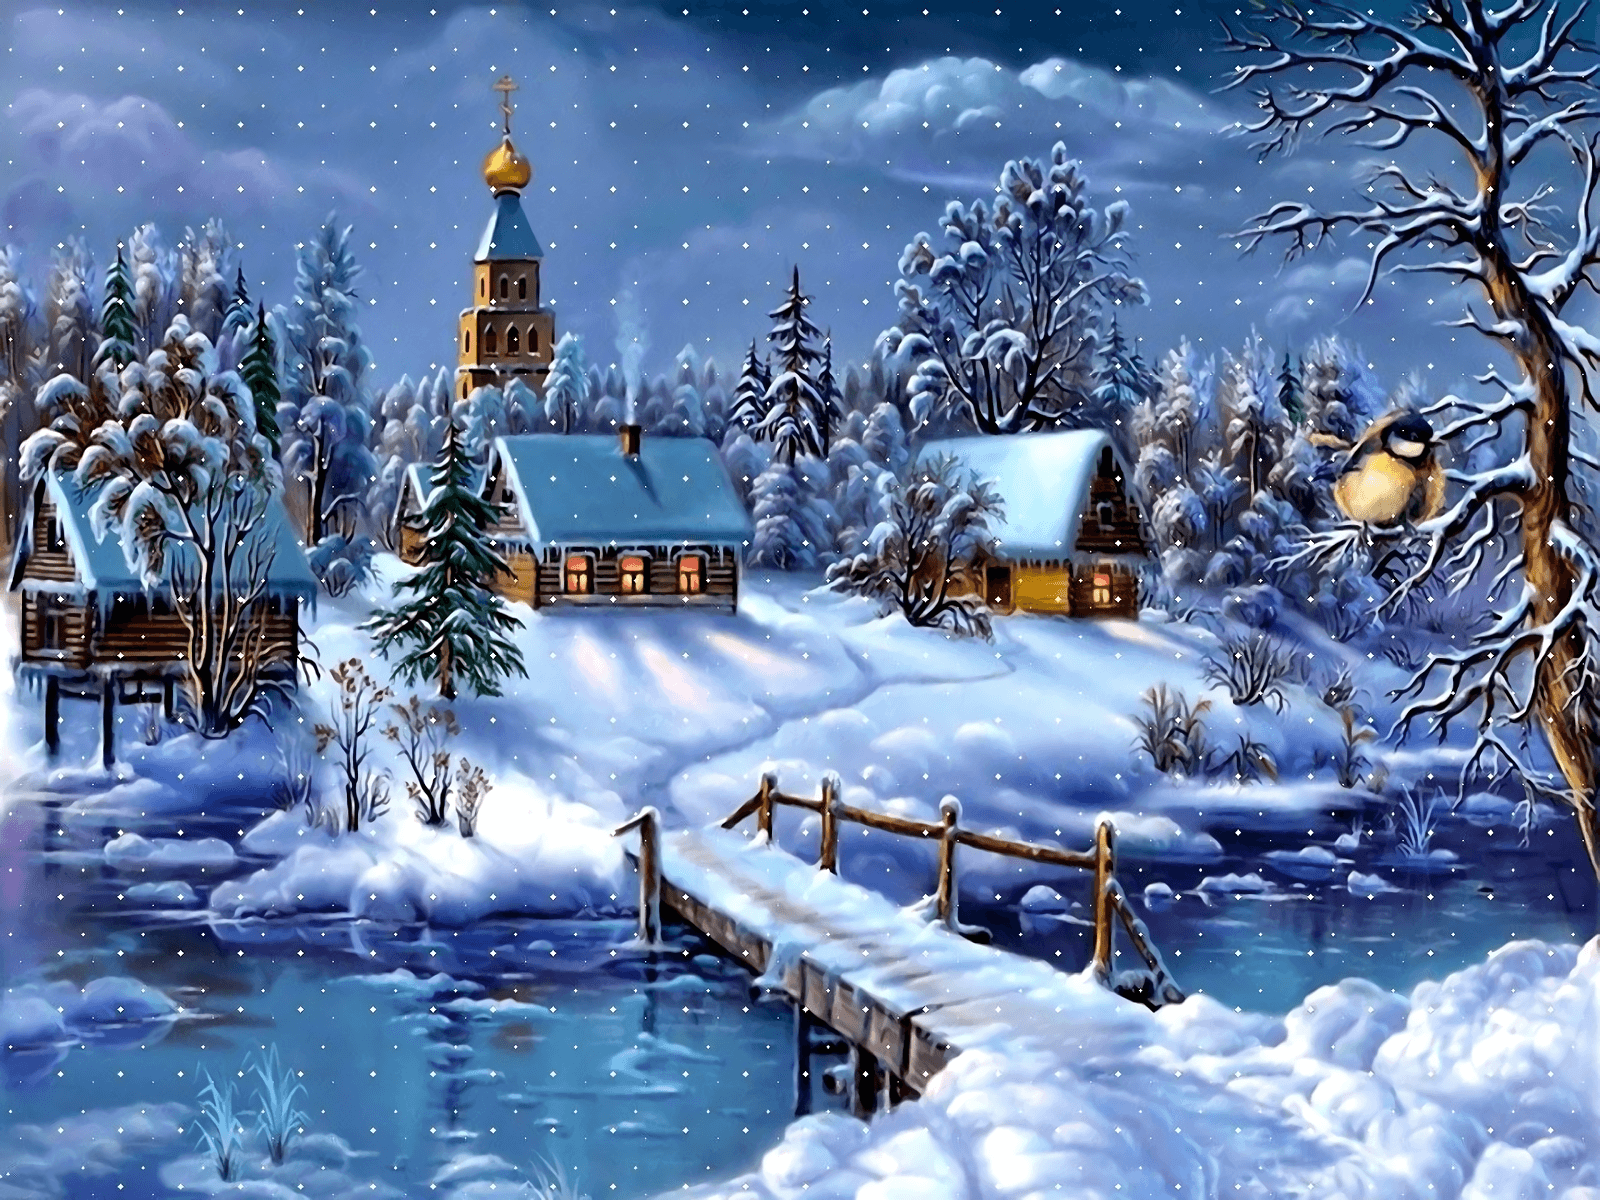 Artistic Winter Artistic Landscape Snow Church House Bridge